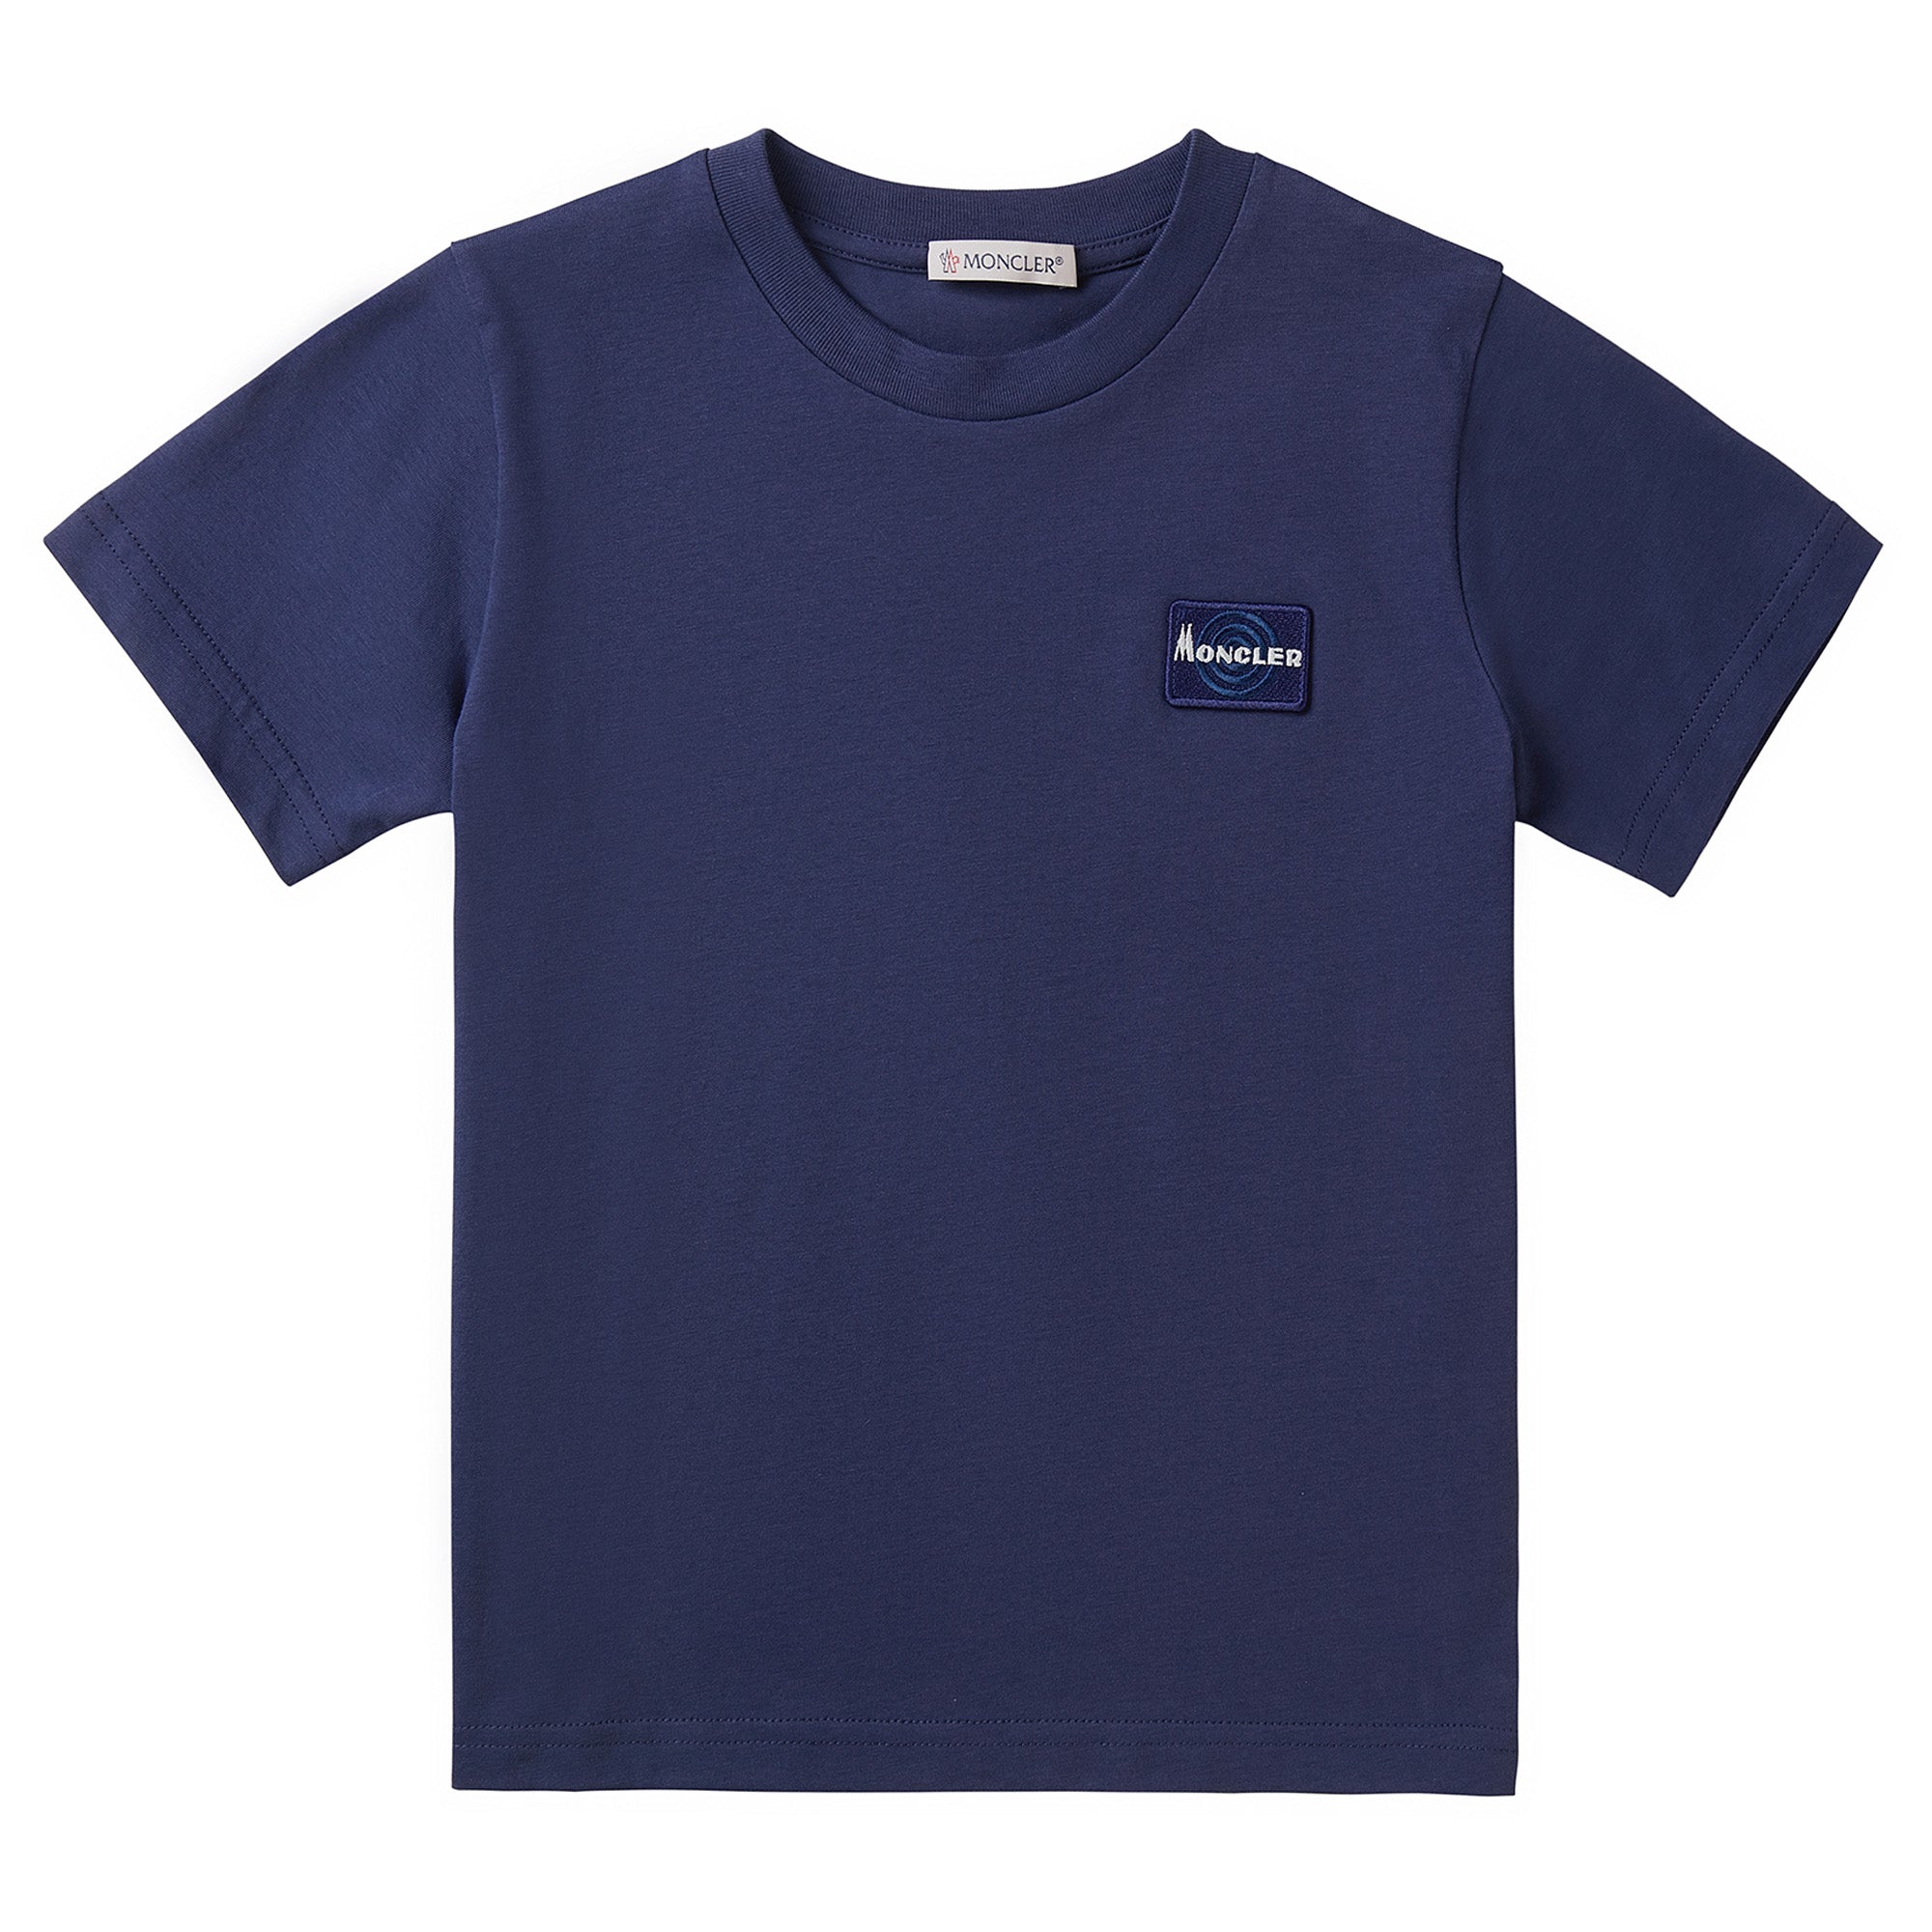 Boys Blue Cotton T-shirt